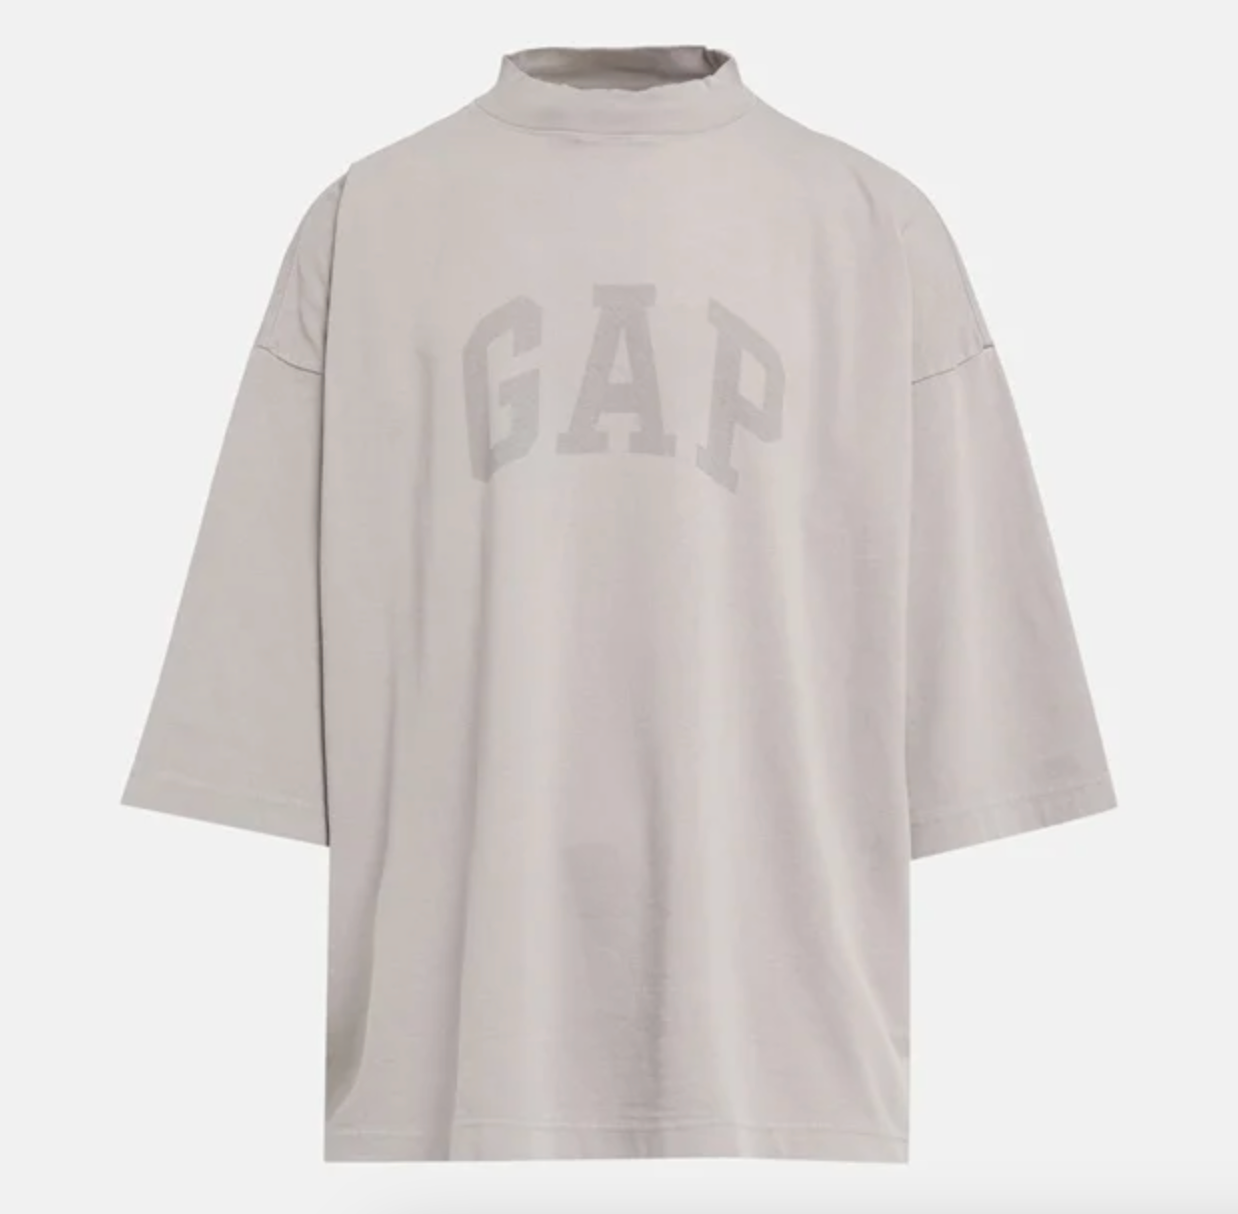 Yeezy Gap Engineered by Balenciaga T-Shirt 3/4 Light Grey Front Lodz Polska